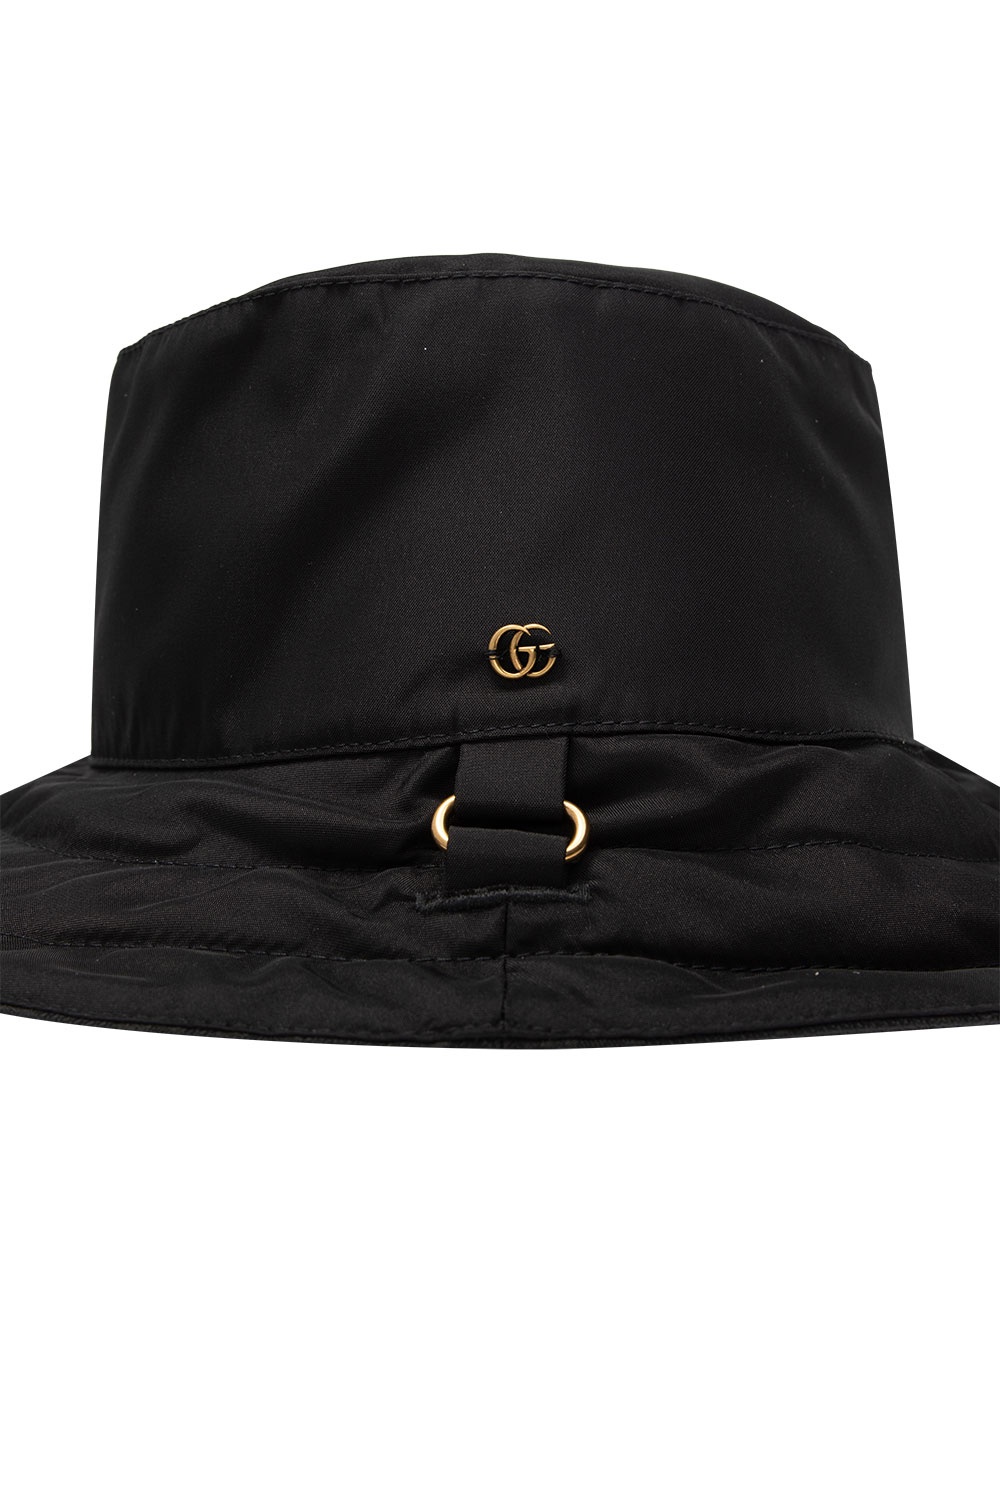 Gucci IetpShops flexfit logo Bucket - Nicaragua with low hat classic profile cap cotton twill Black dad -